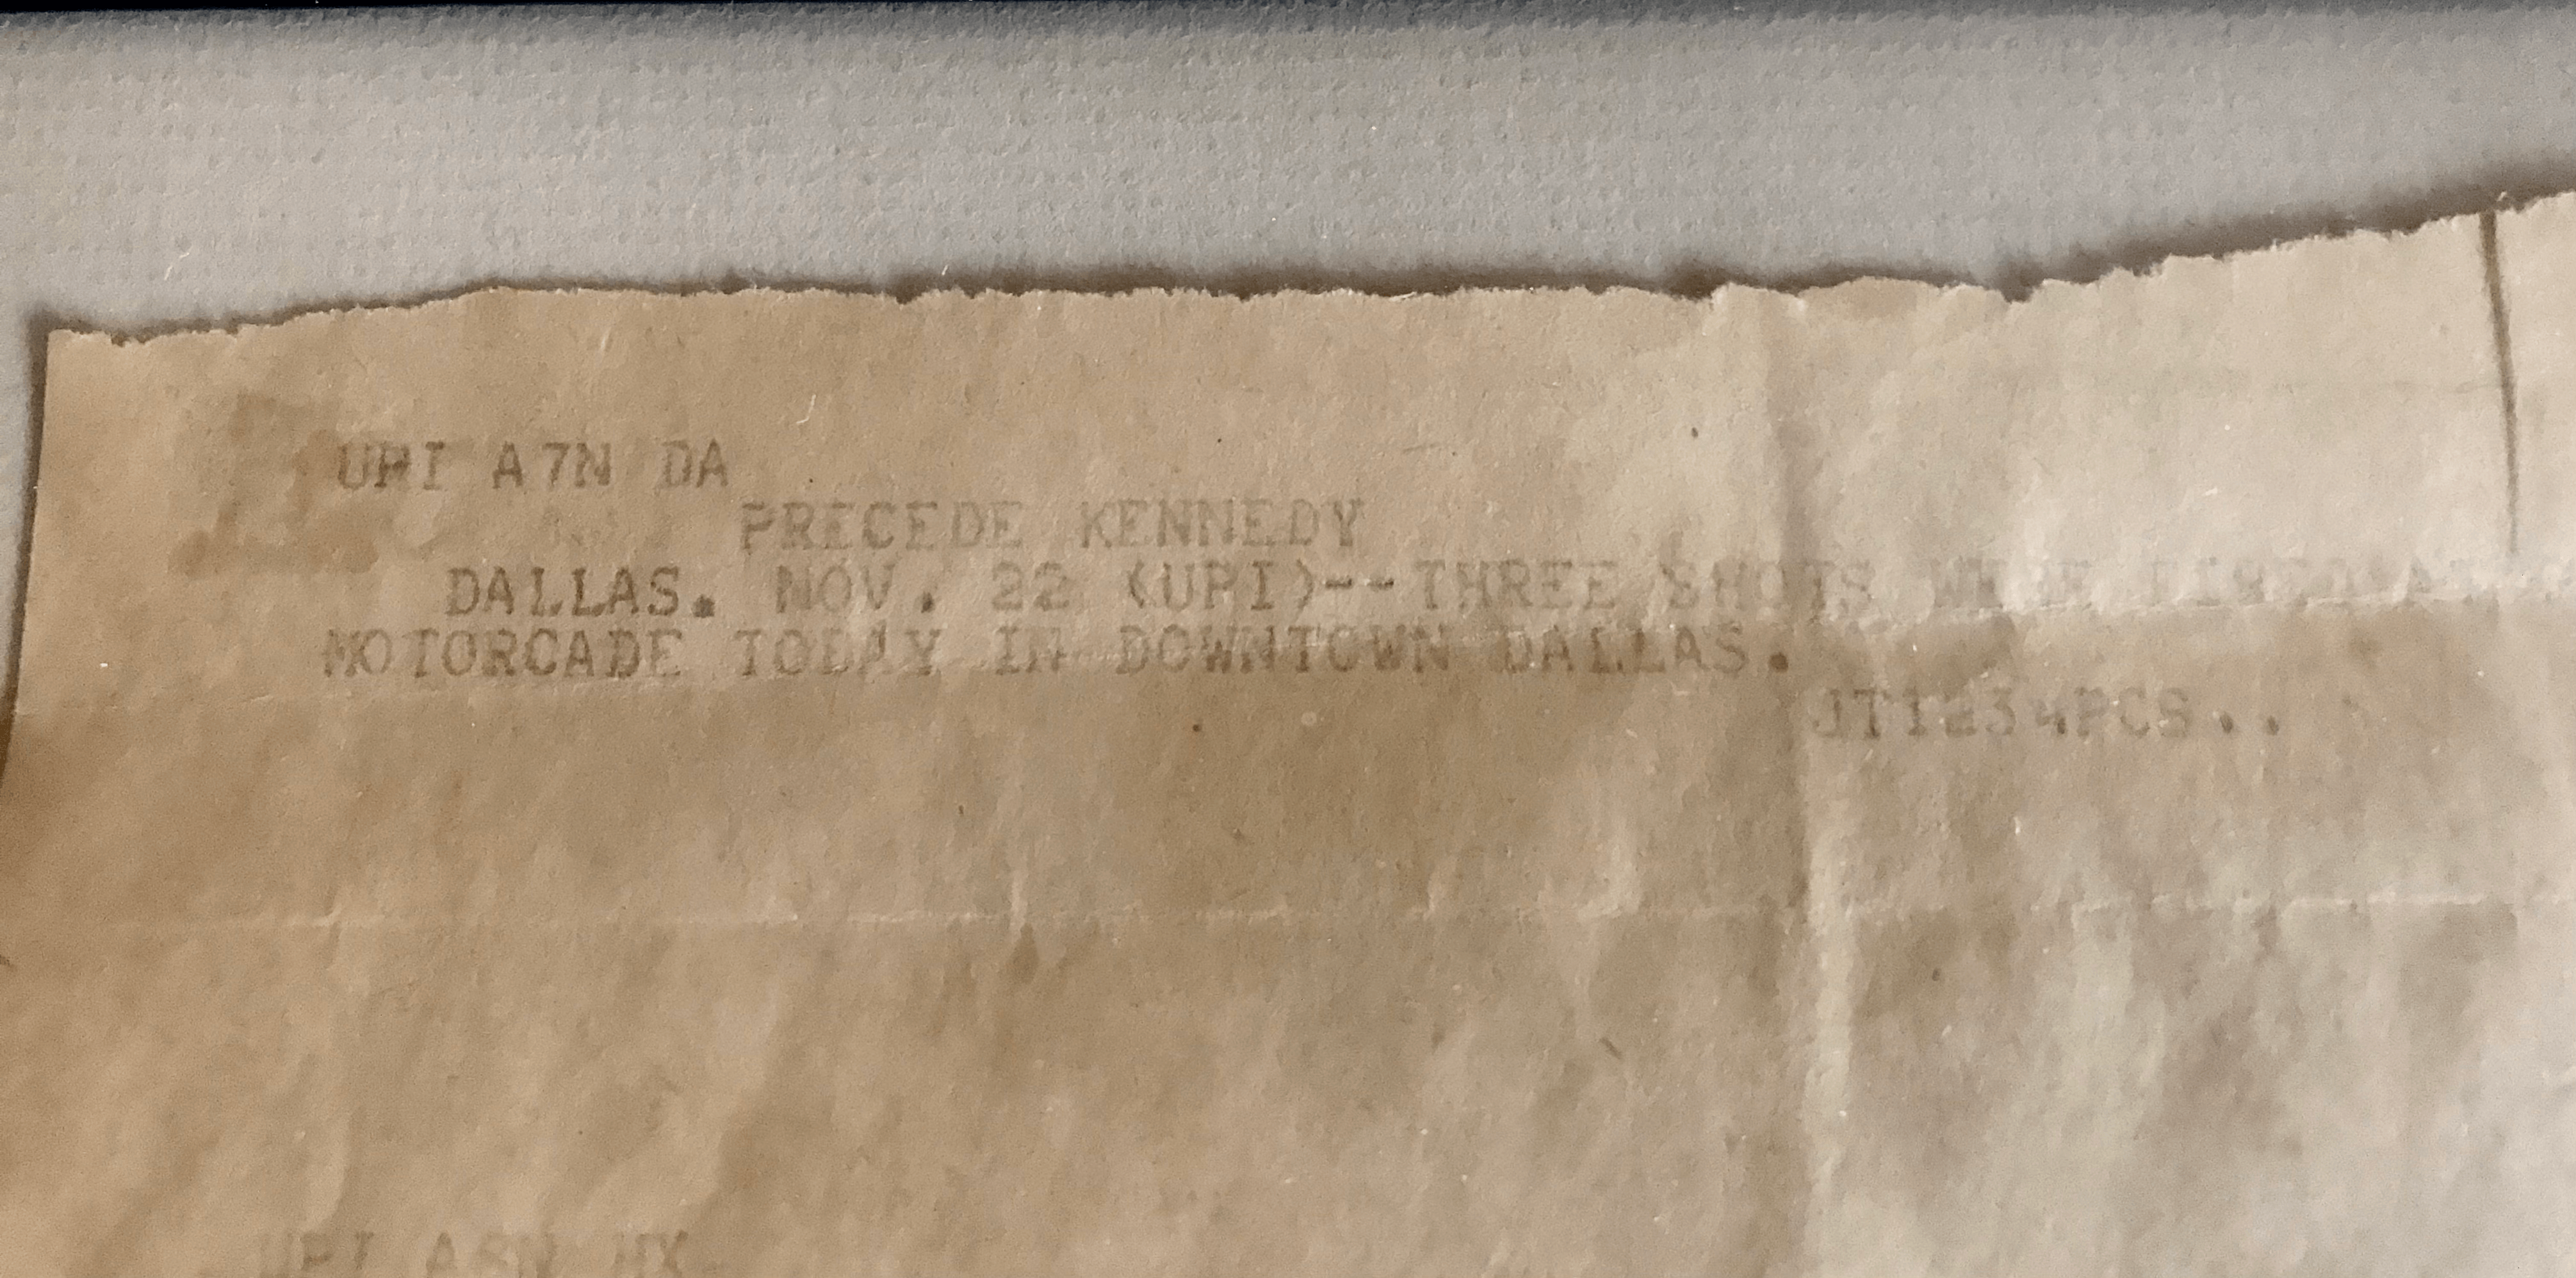 JFK Three Shots Were Fired UPI Teletype November 22, 1963